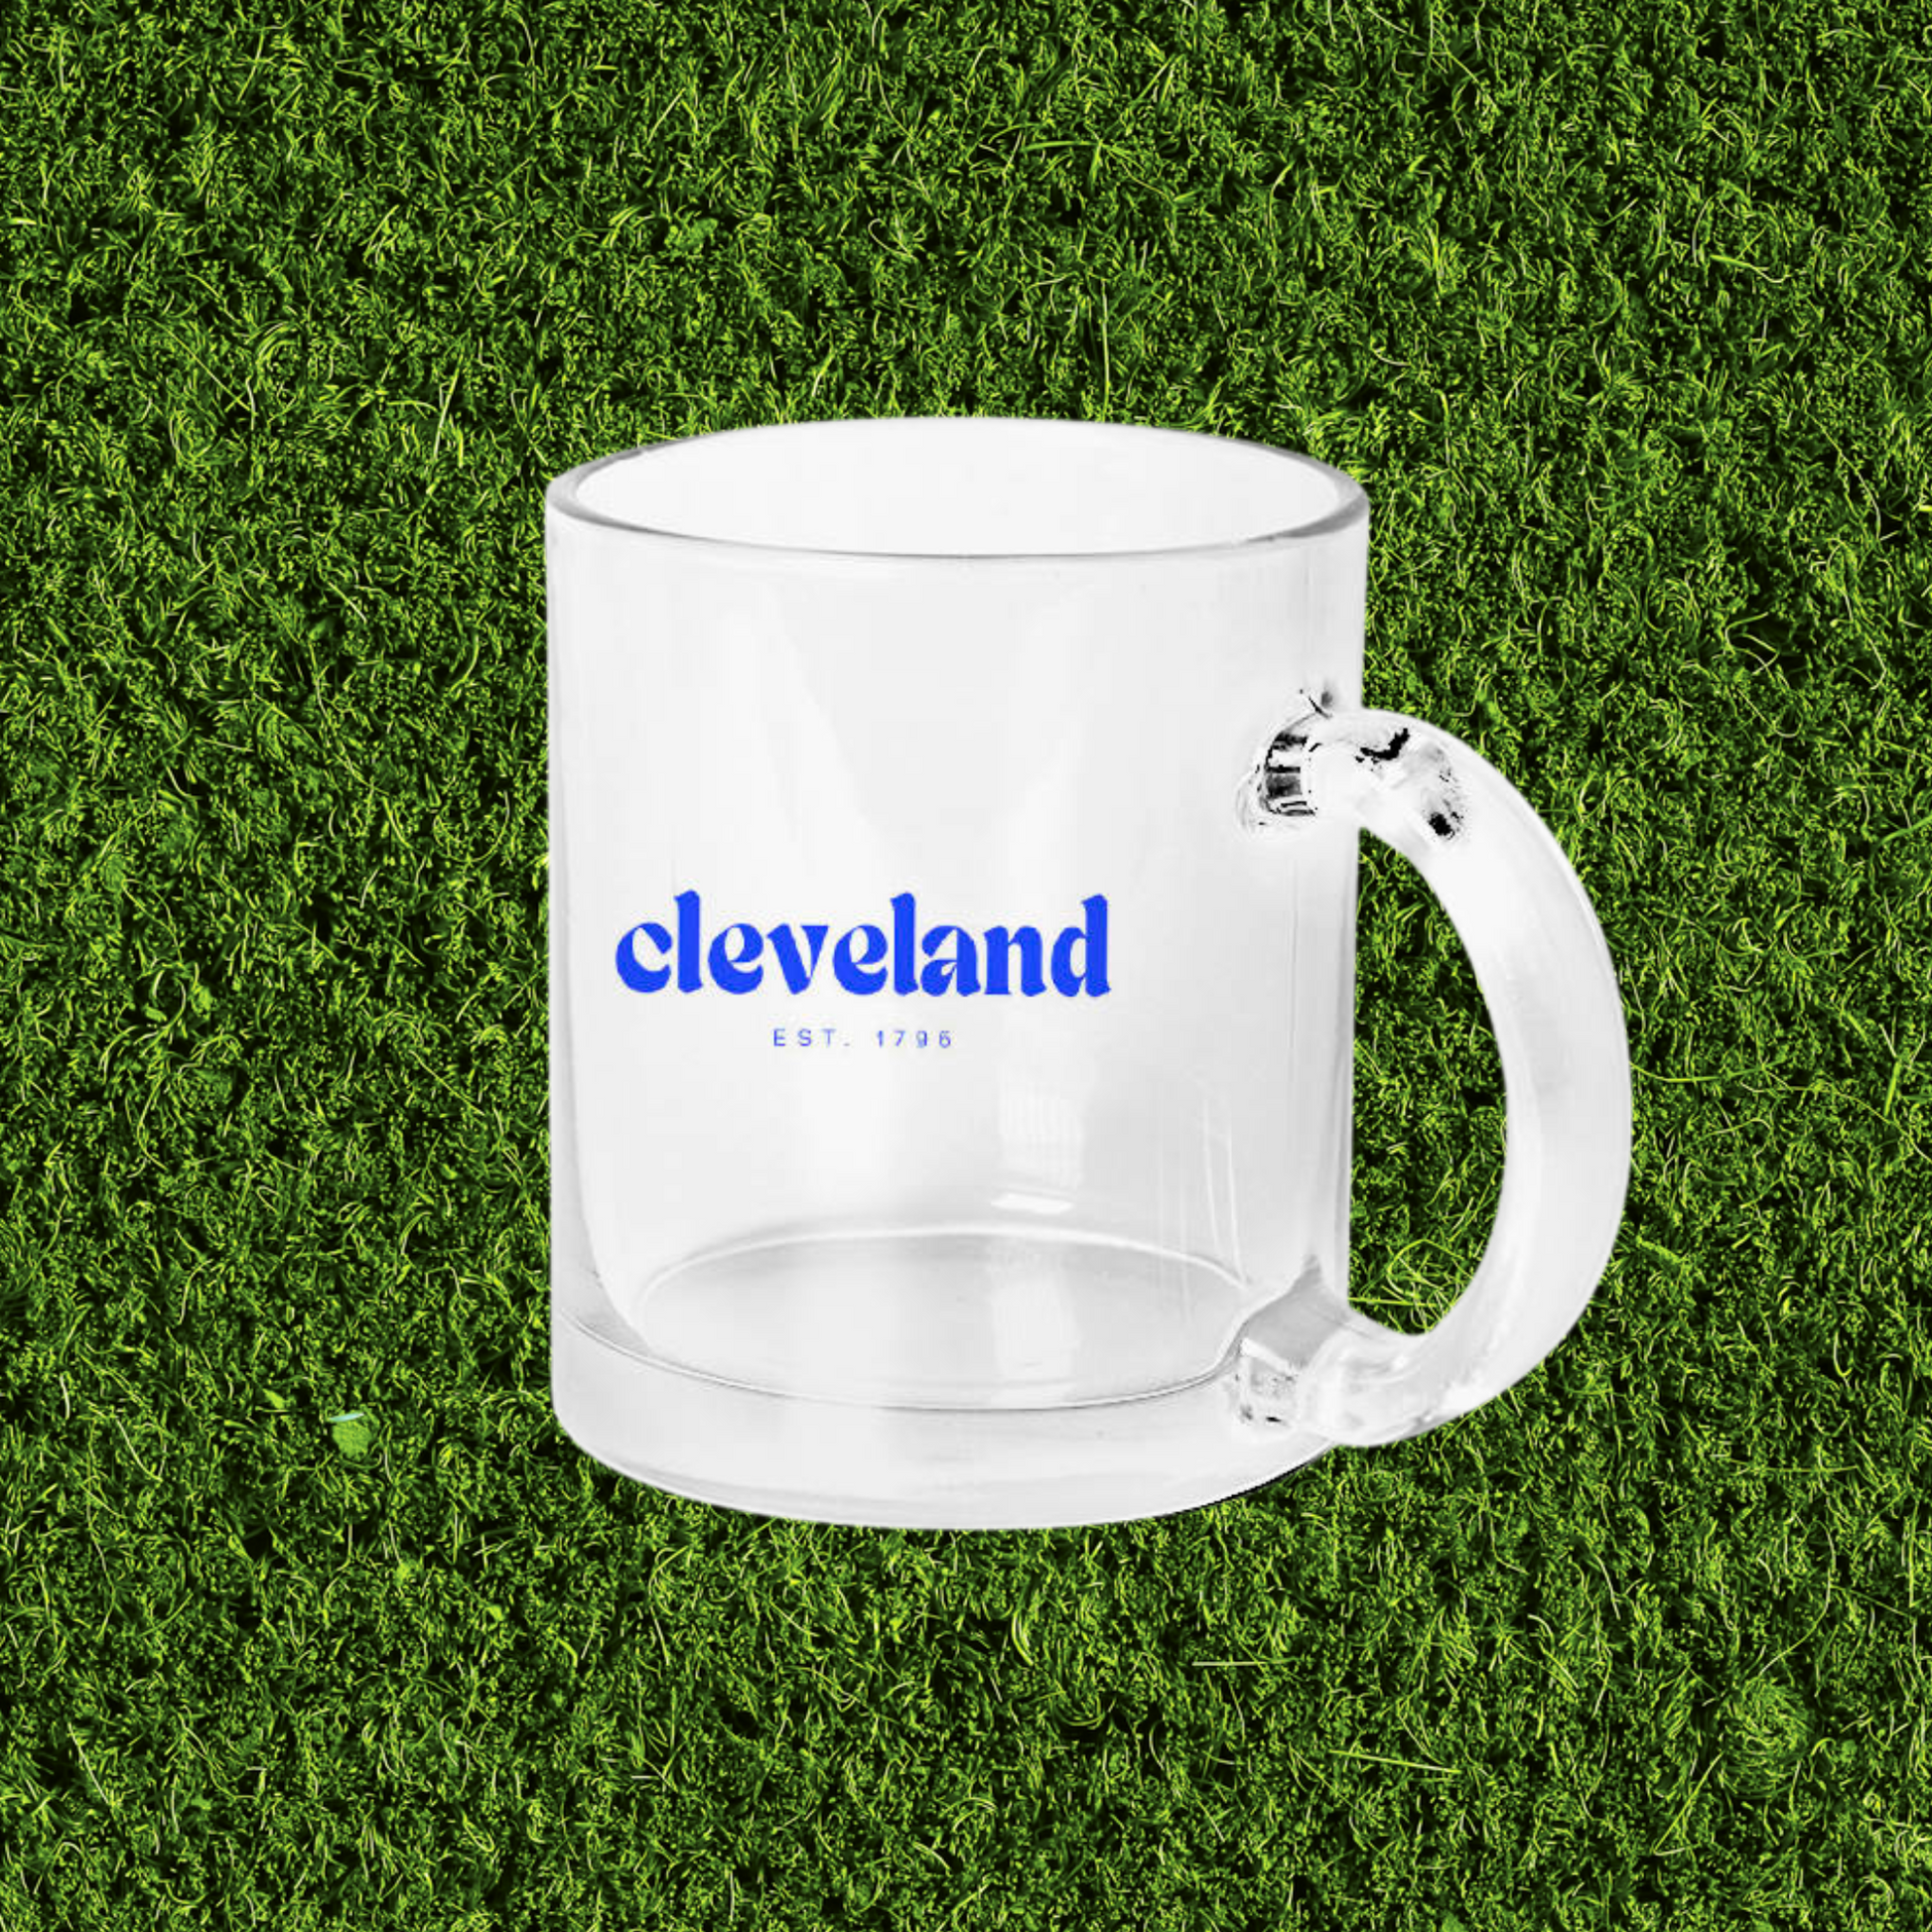 blue cleveland text established 1796 mug